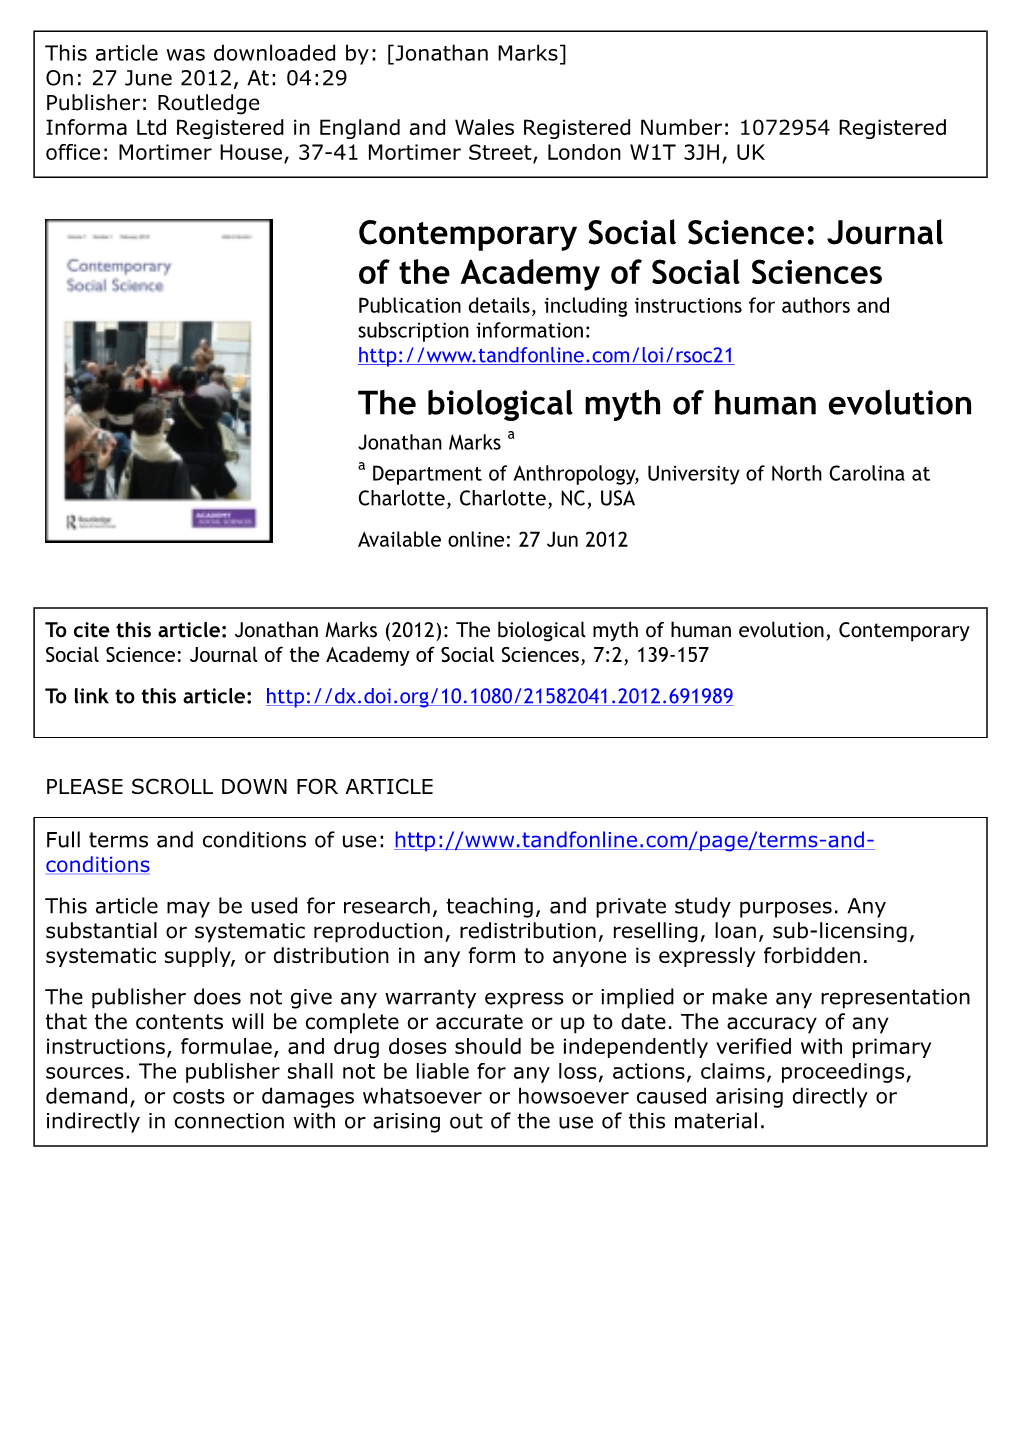 The Biological Myth of Human Evolution